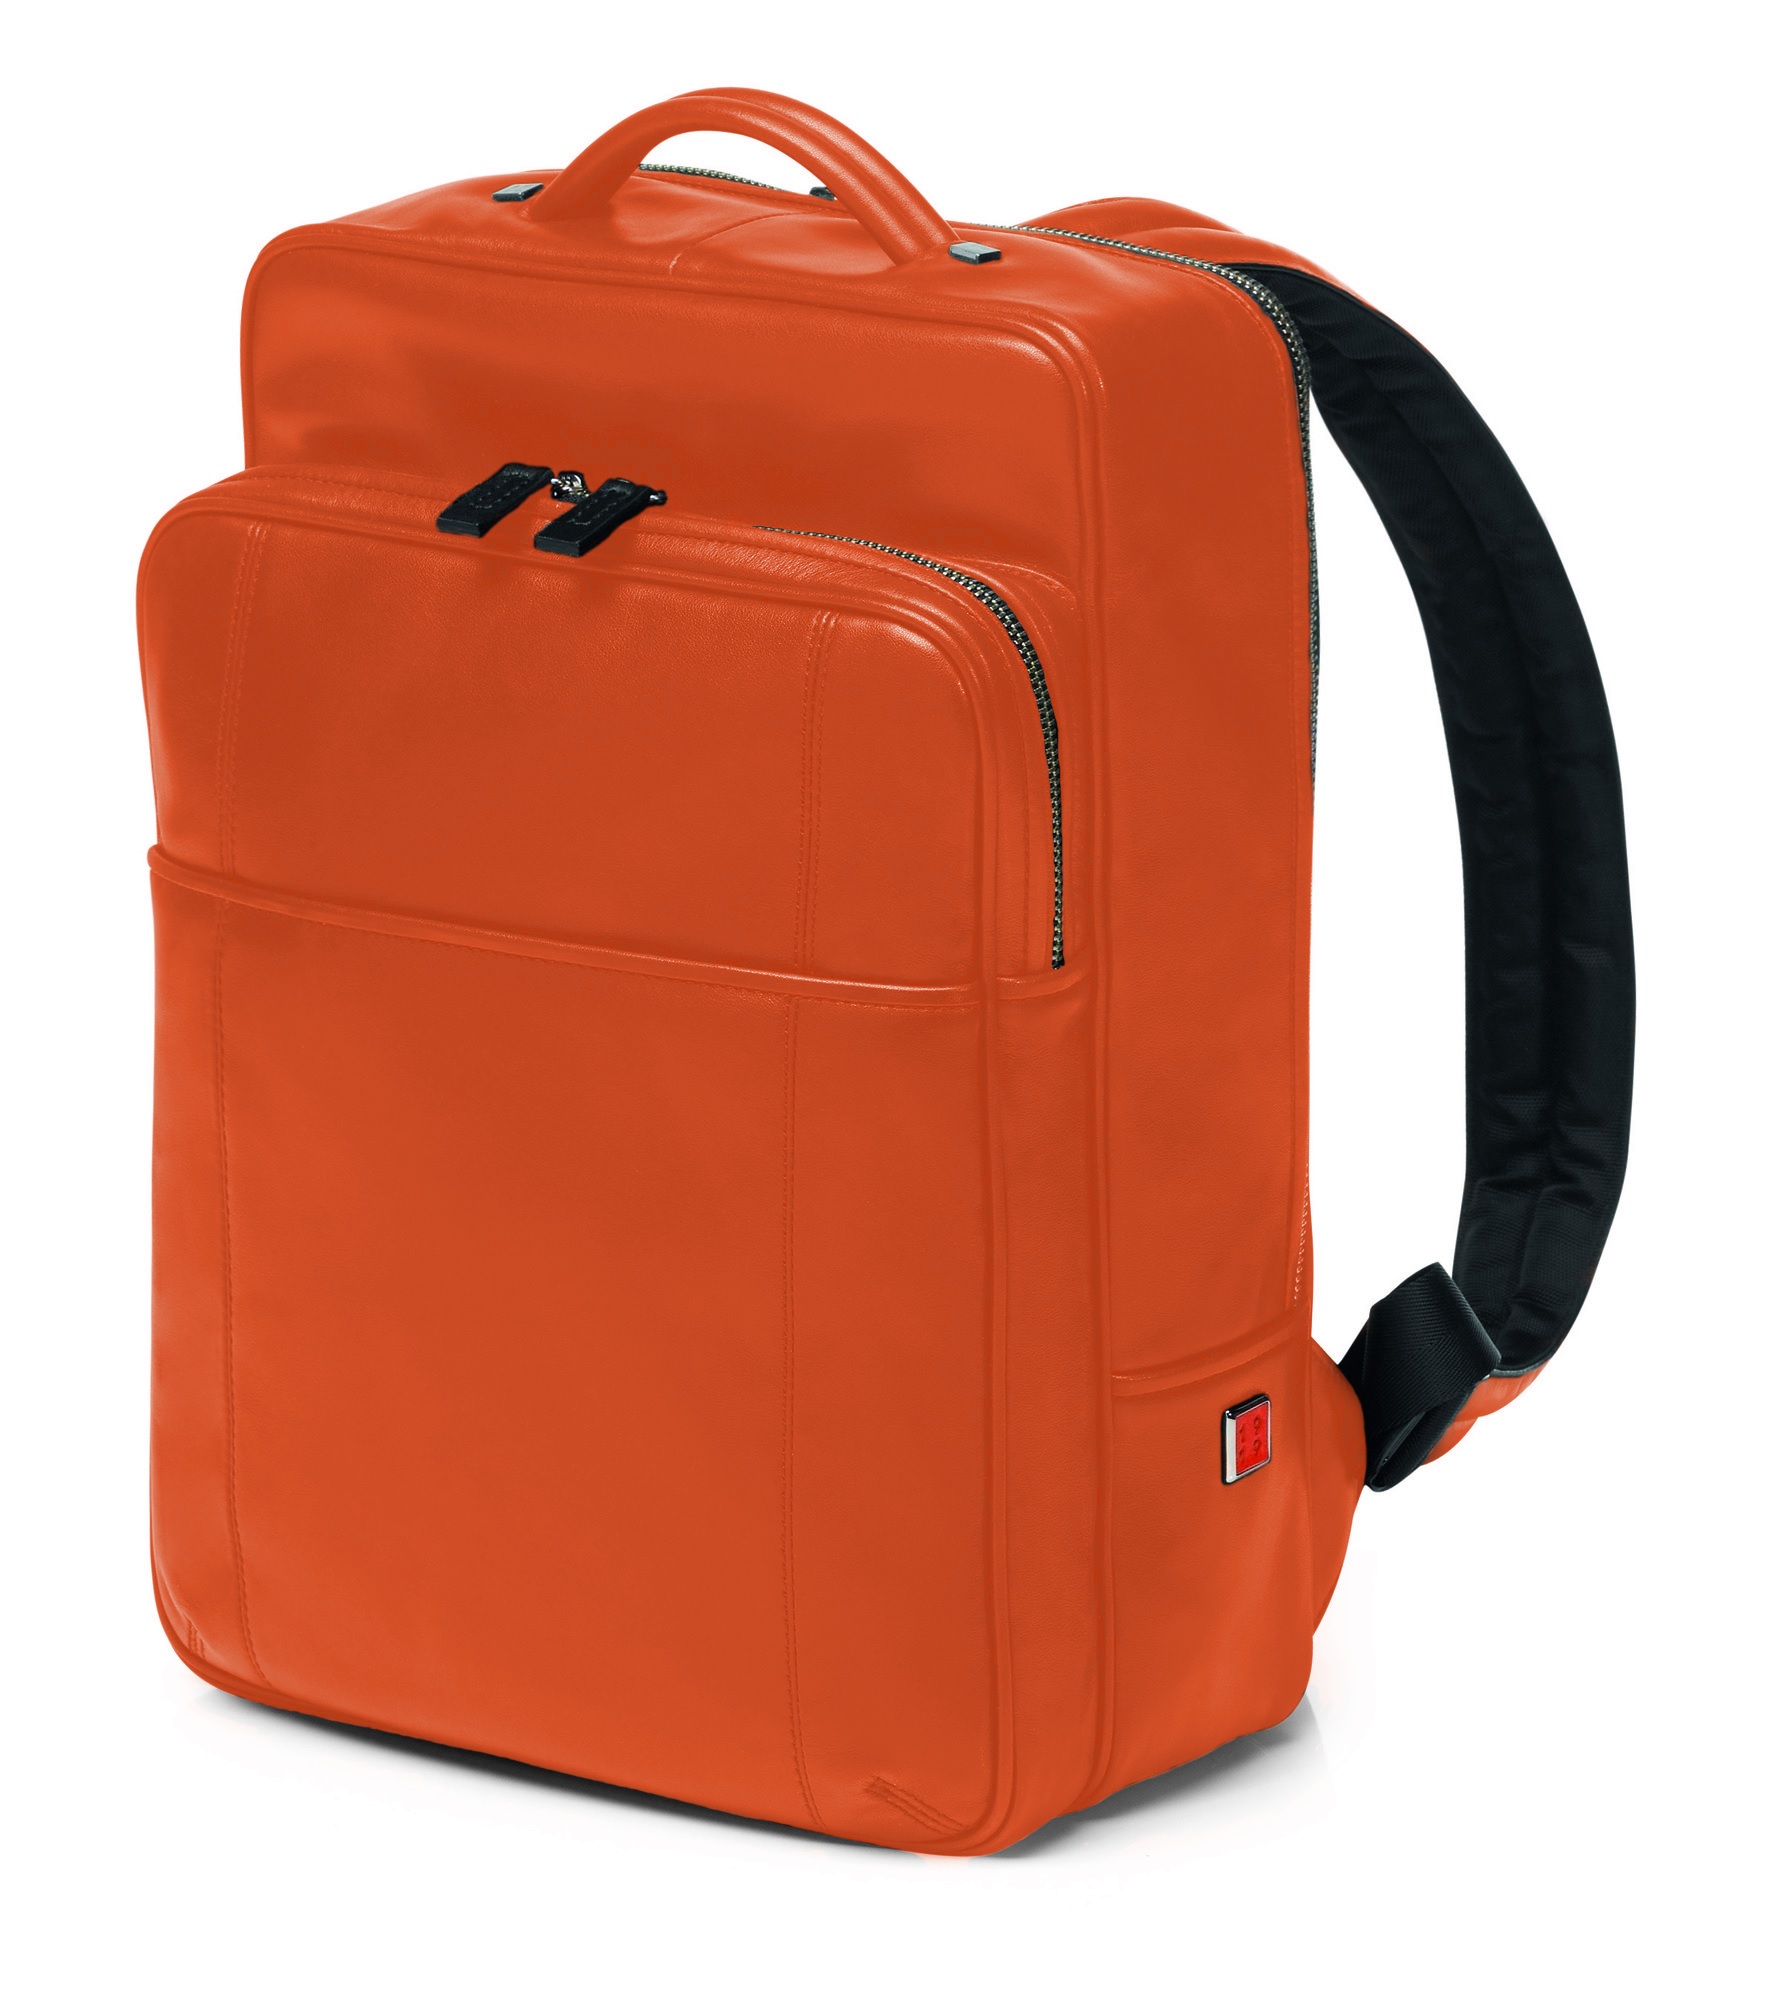 rucsac portocaliu din piele de bovina fedon british backpack title=rucsac portocaliu din piele de bovina fedon british backpack